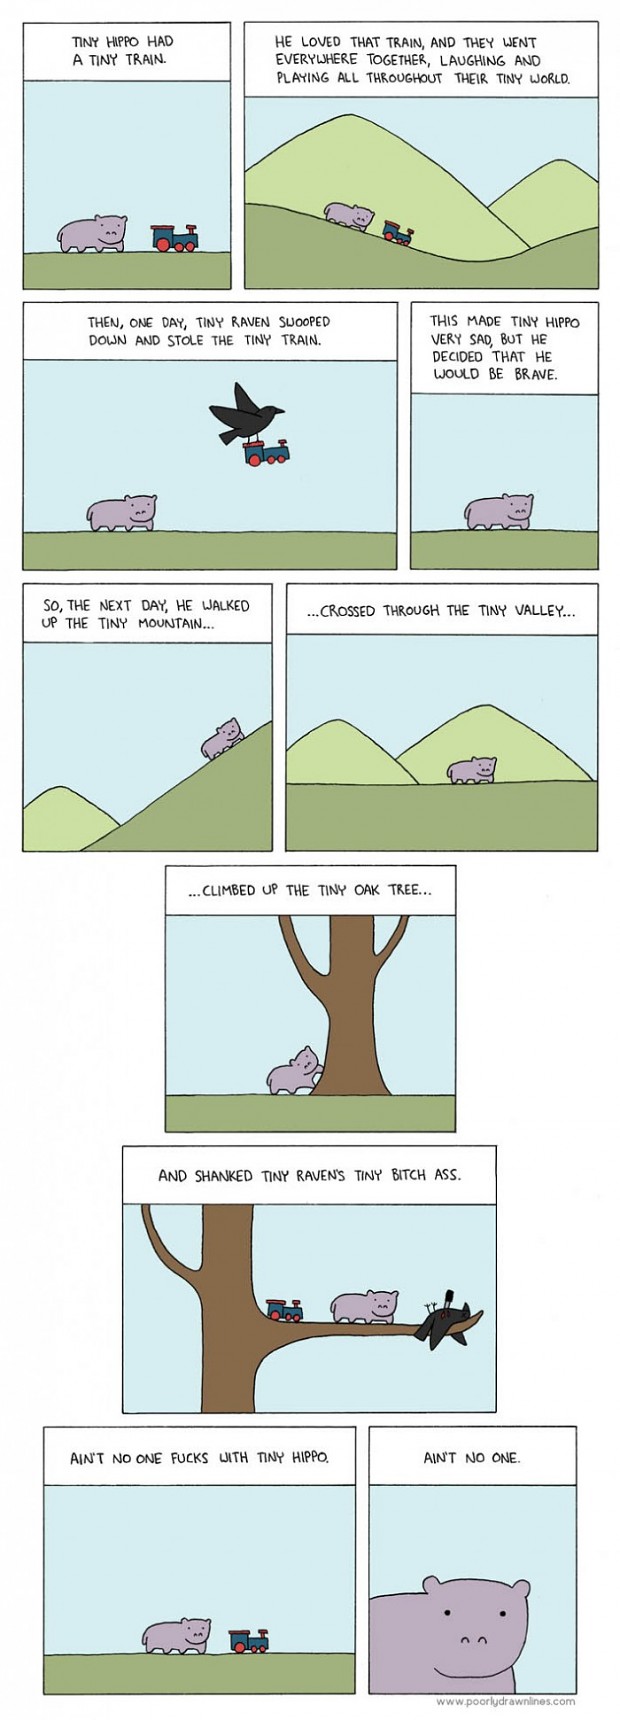 A story about a tiny hippo...